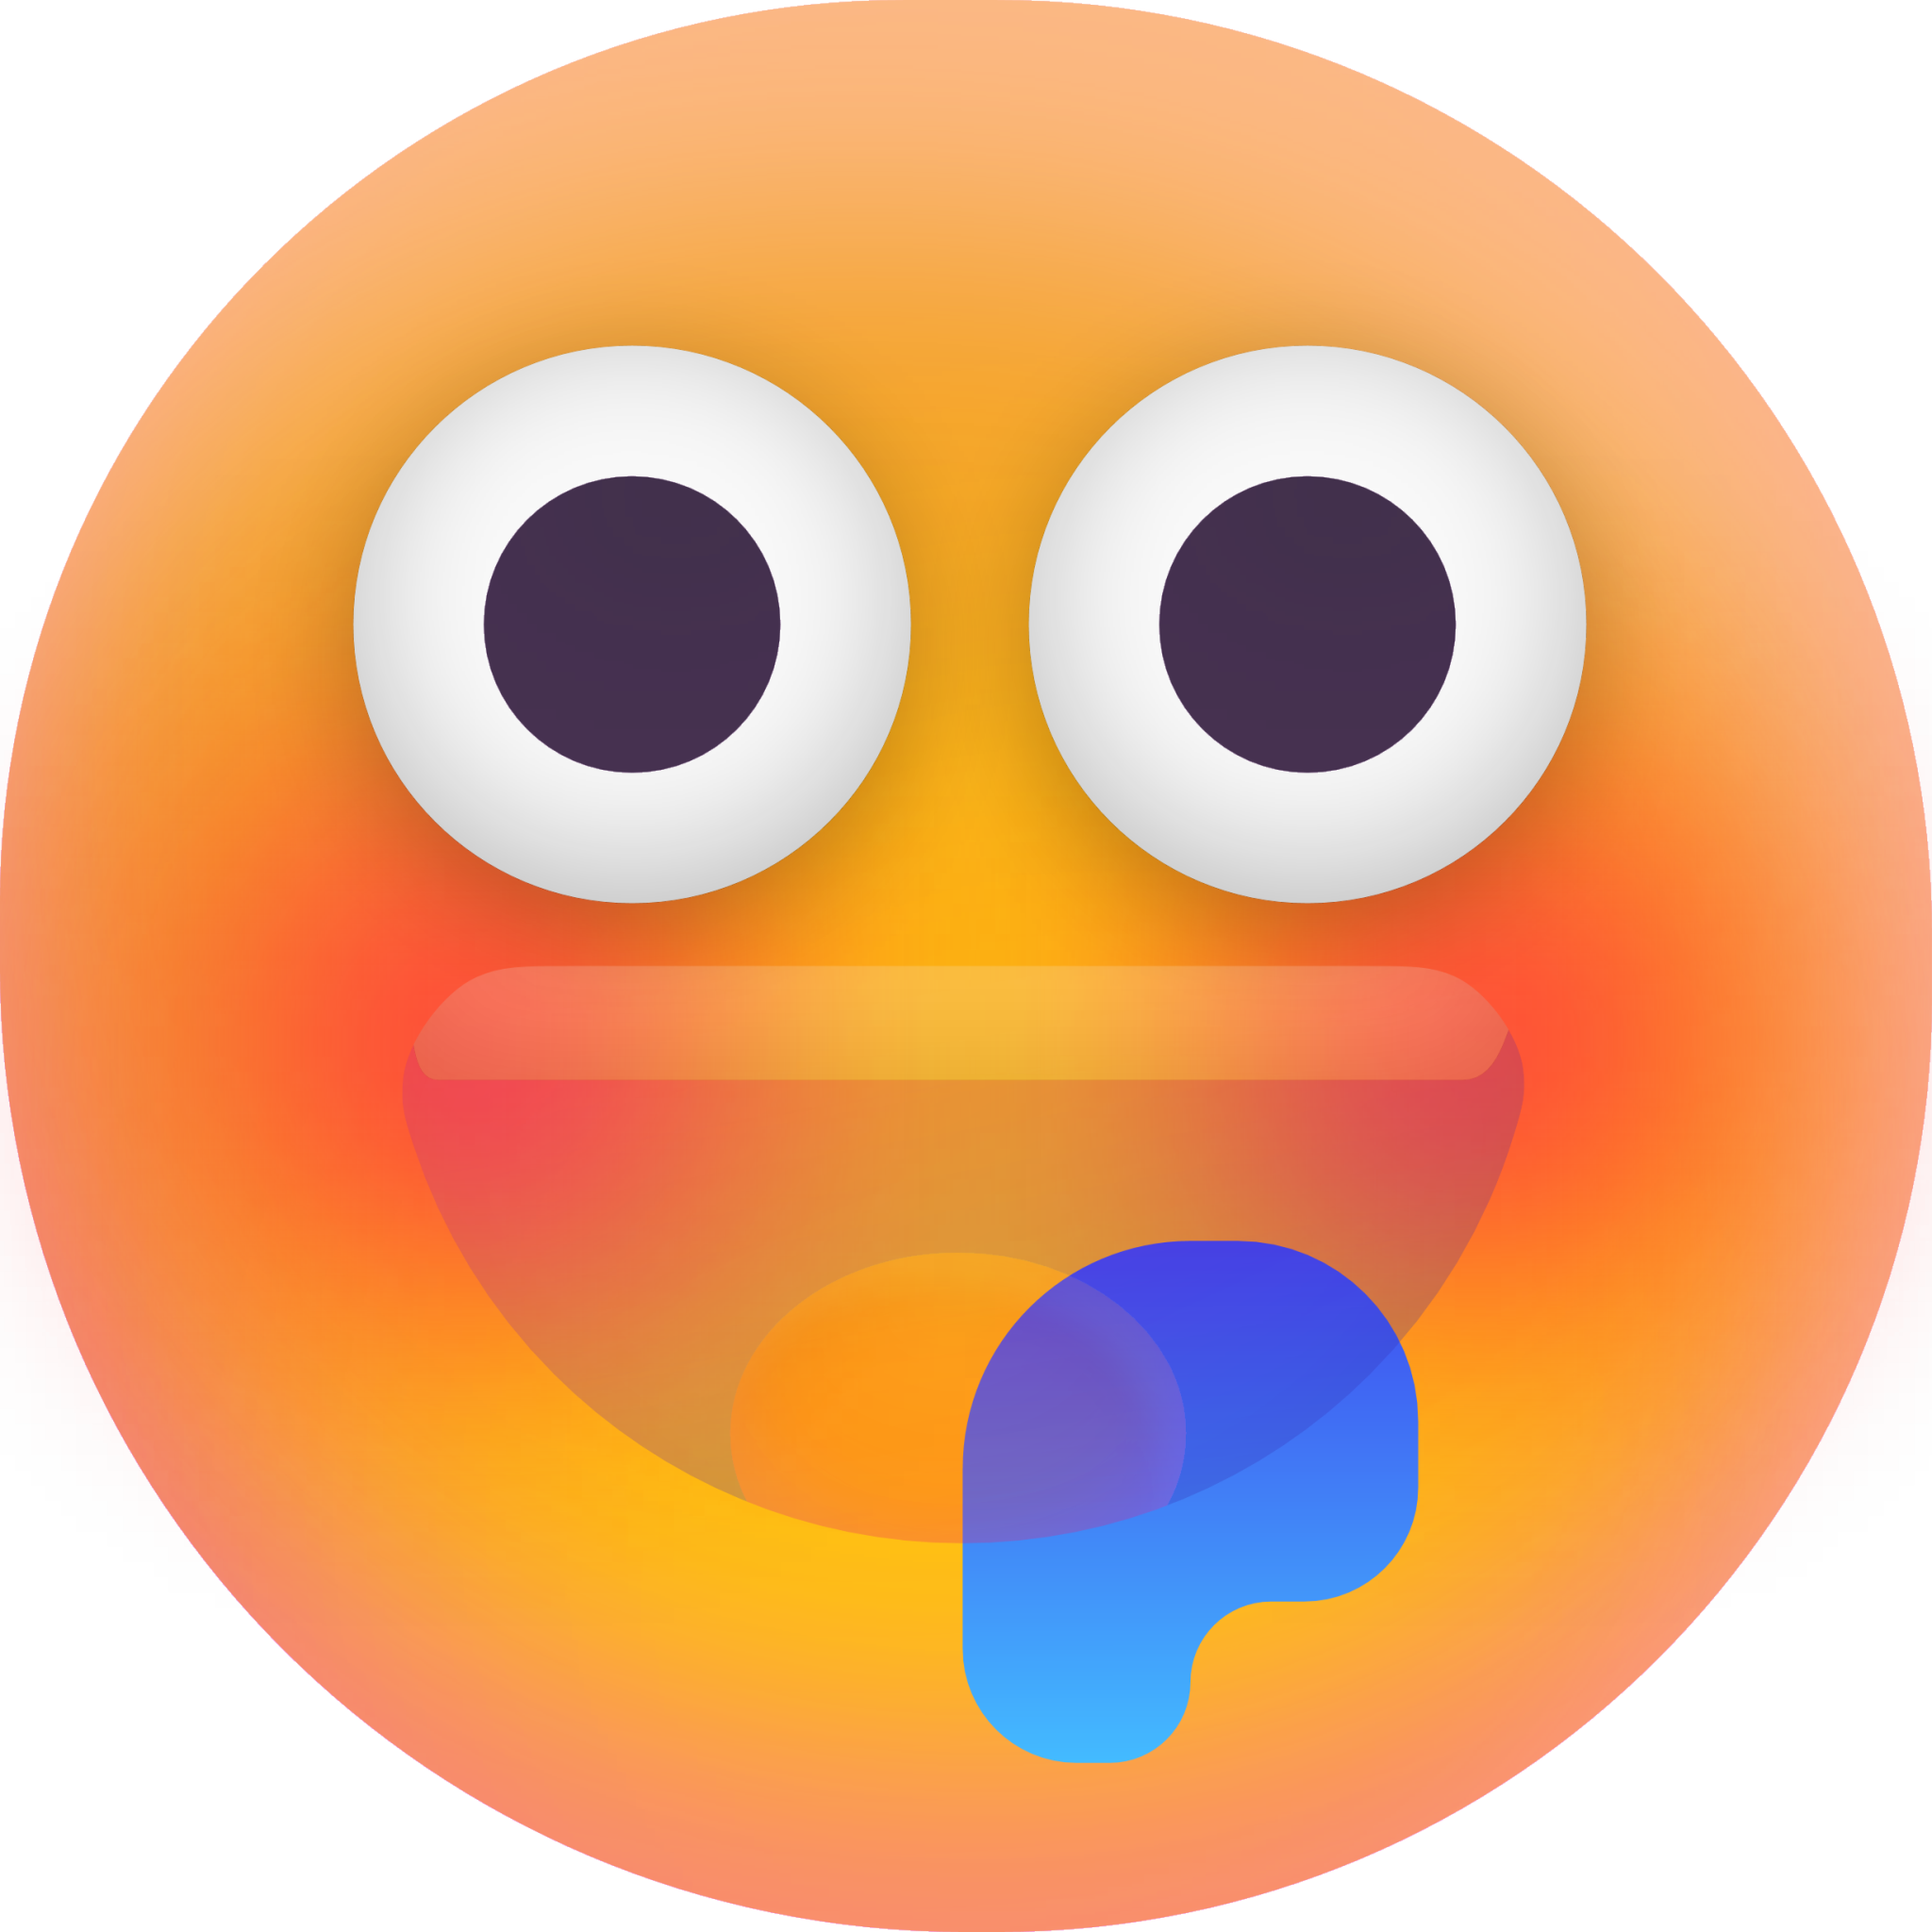 Drooling Face emoji